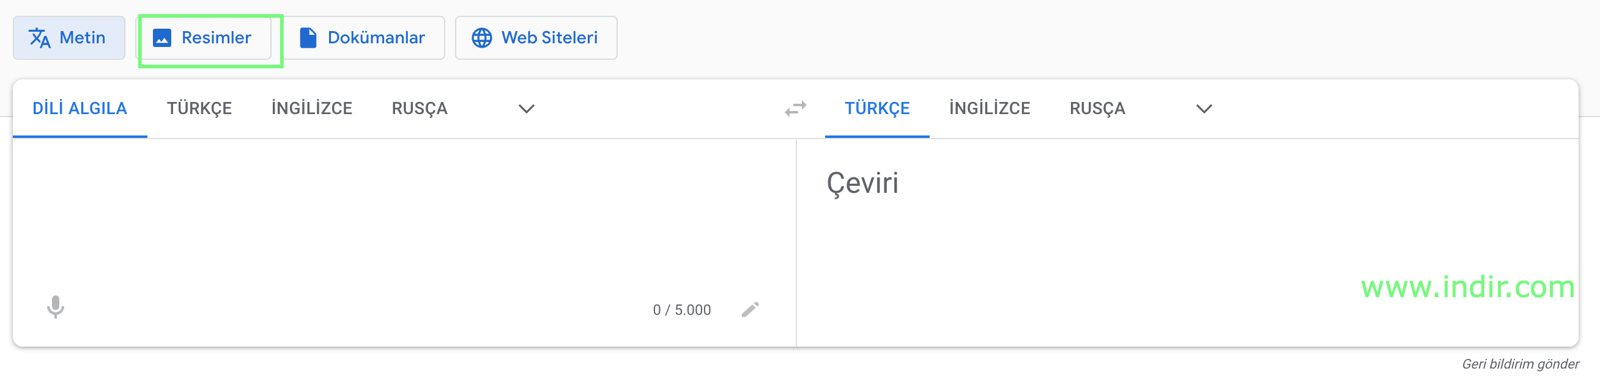 Google görsel çeviri